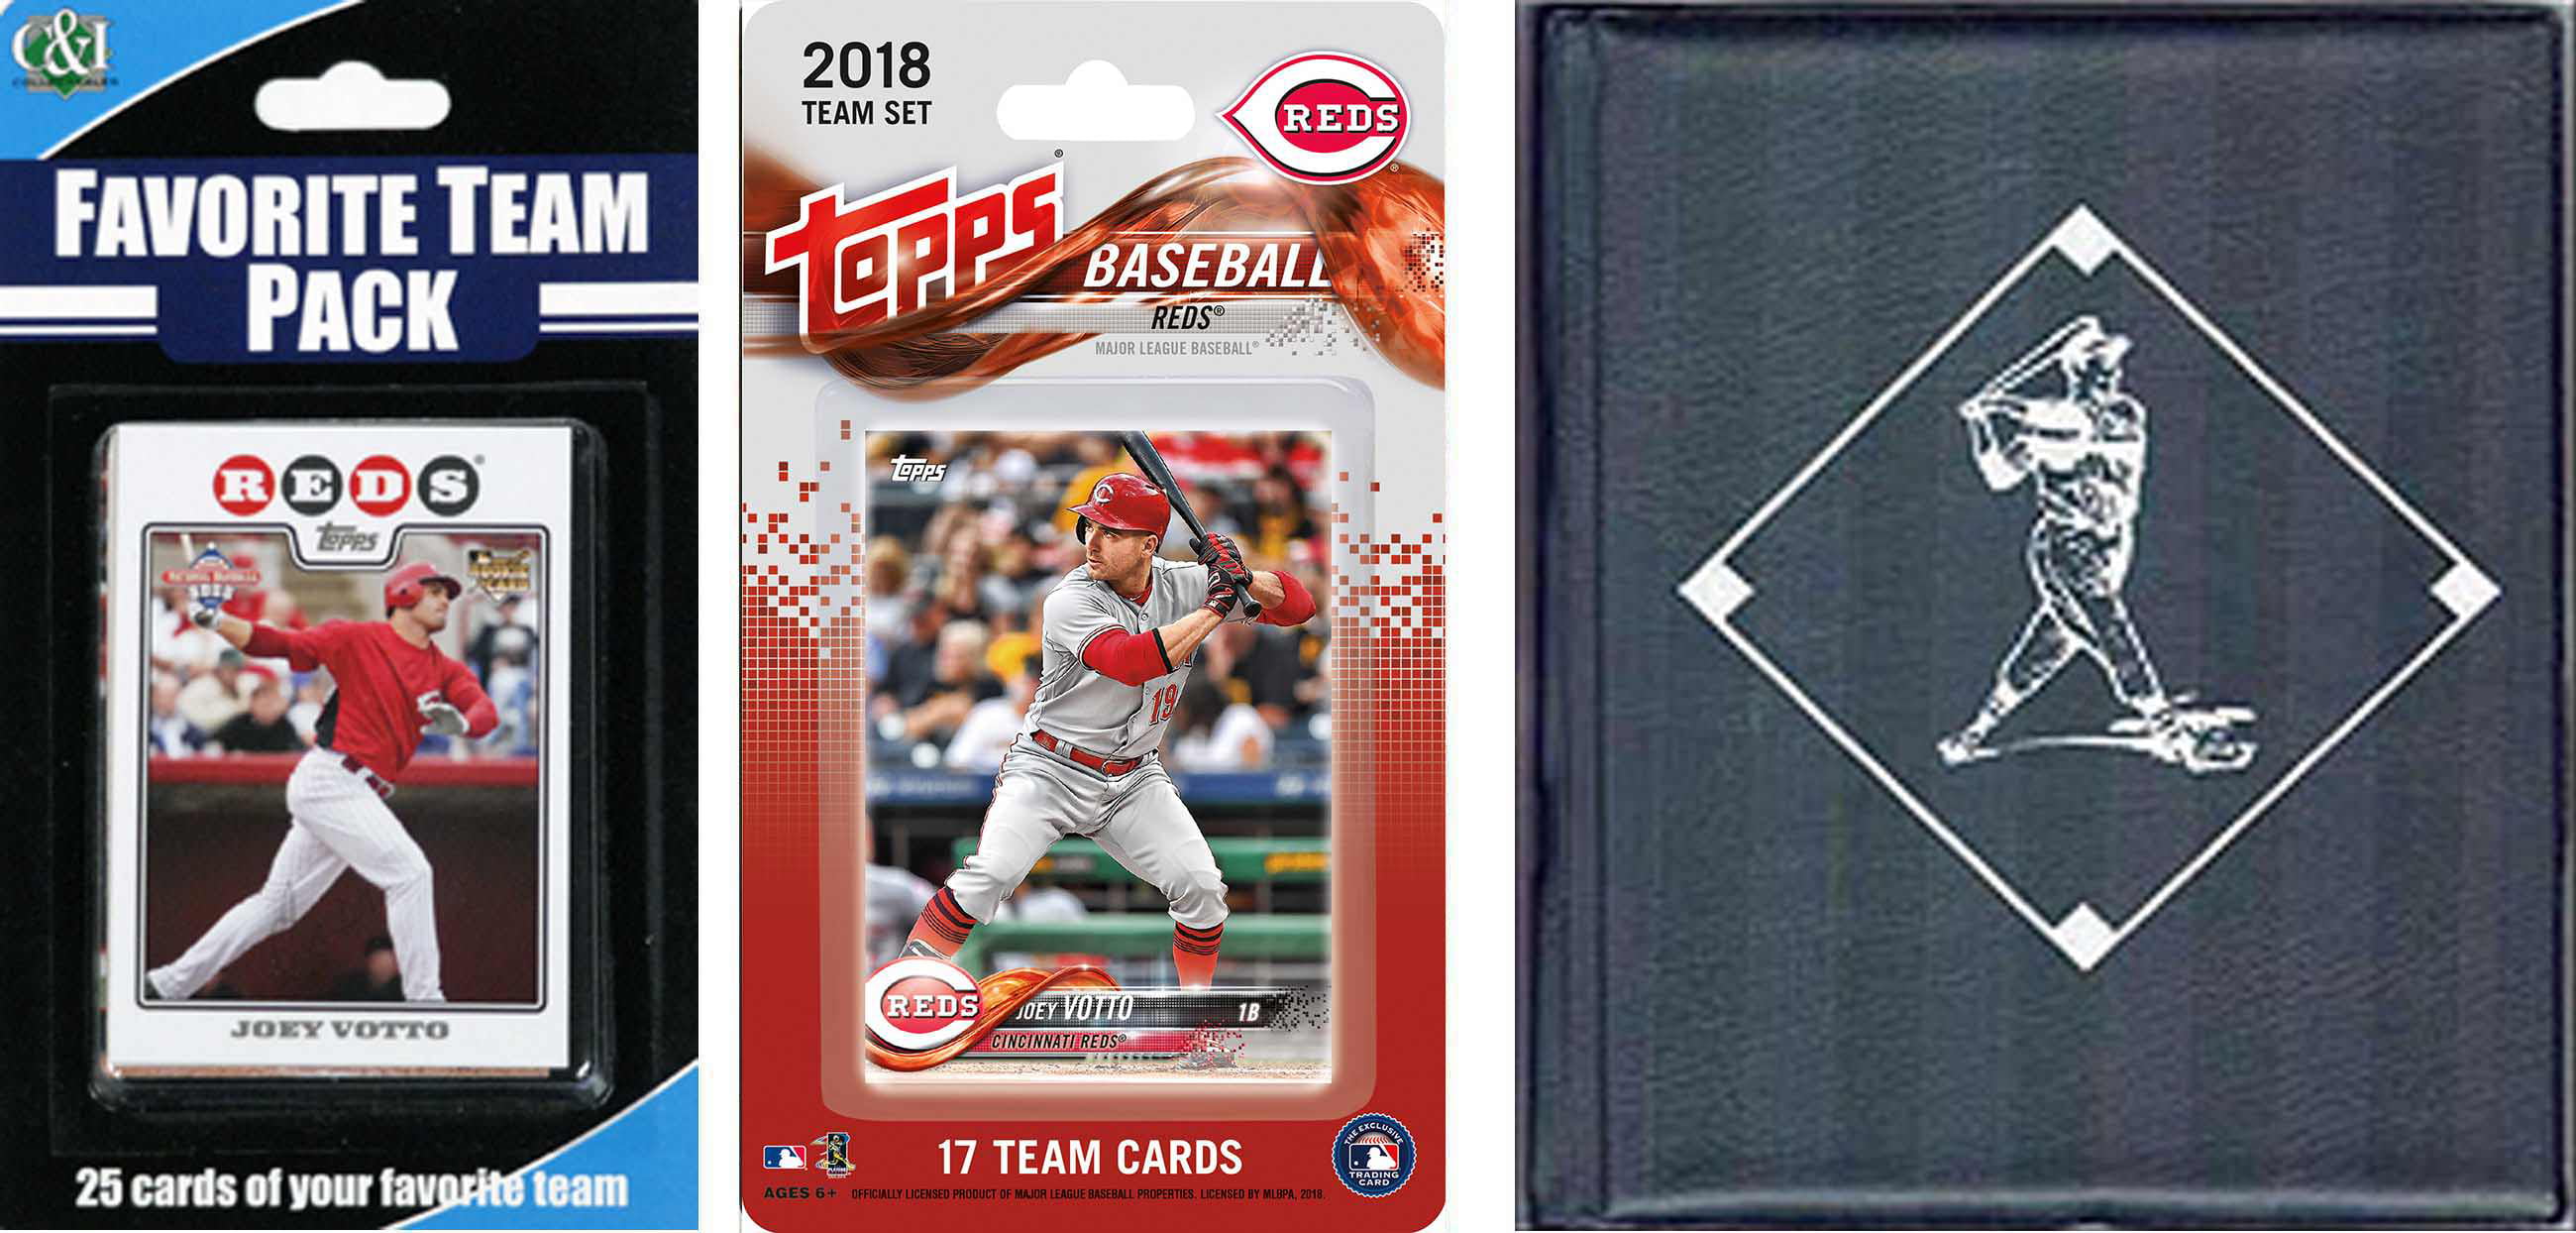 C & I Collectables REDSTSC18 MLB Cincinnati Reds Licensed 2018 Topps Team Set & Favorite Player Trading Cards Plus Storage Album -  C & I Collectables Inc